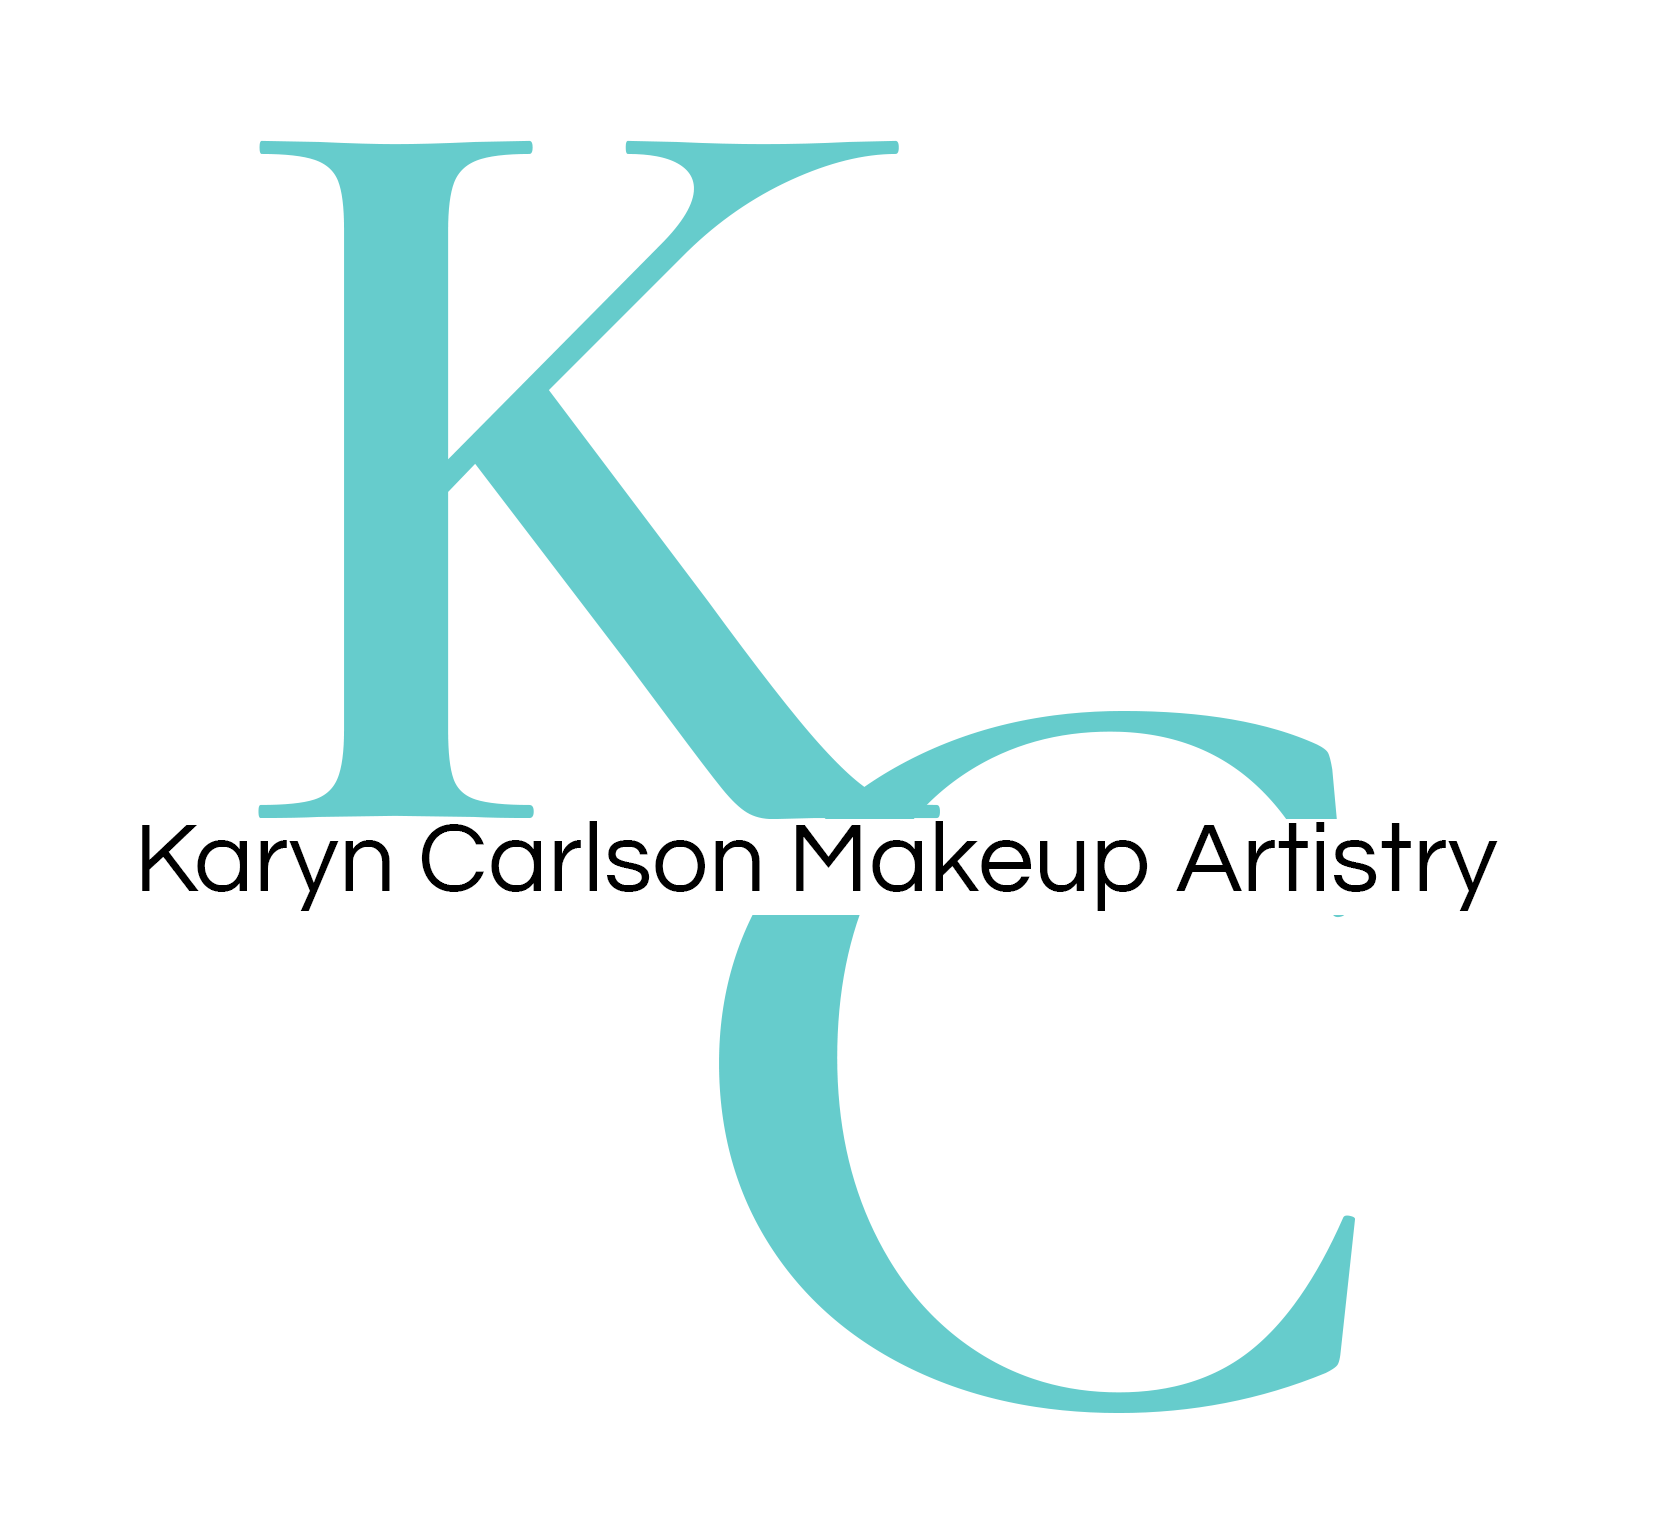 Karyn Carlson Makeup Artistry